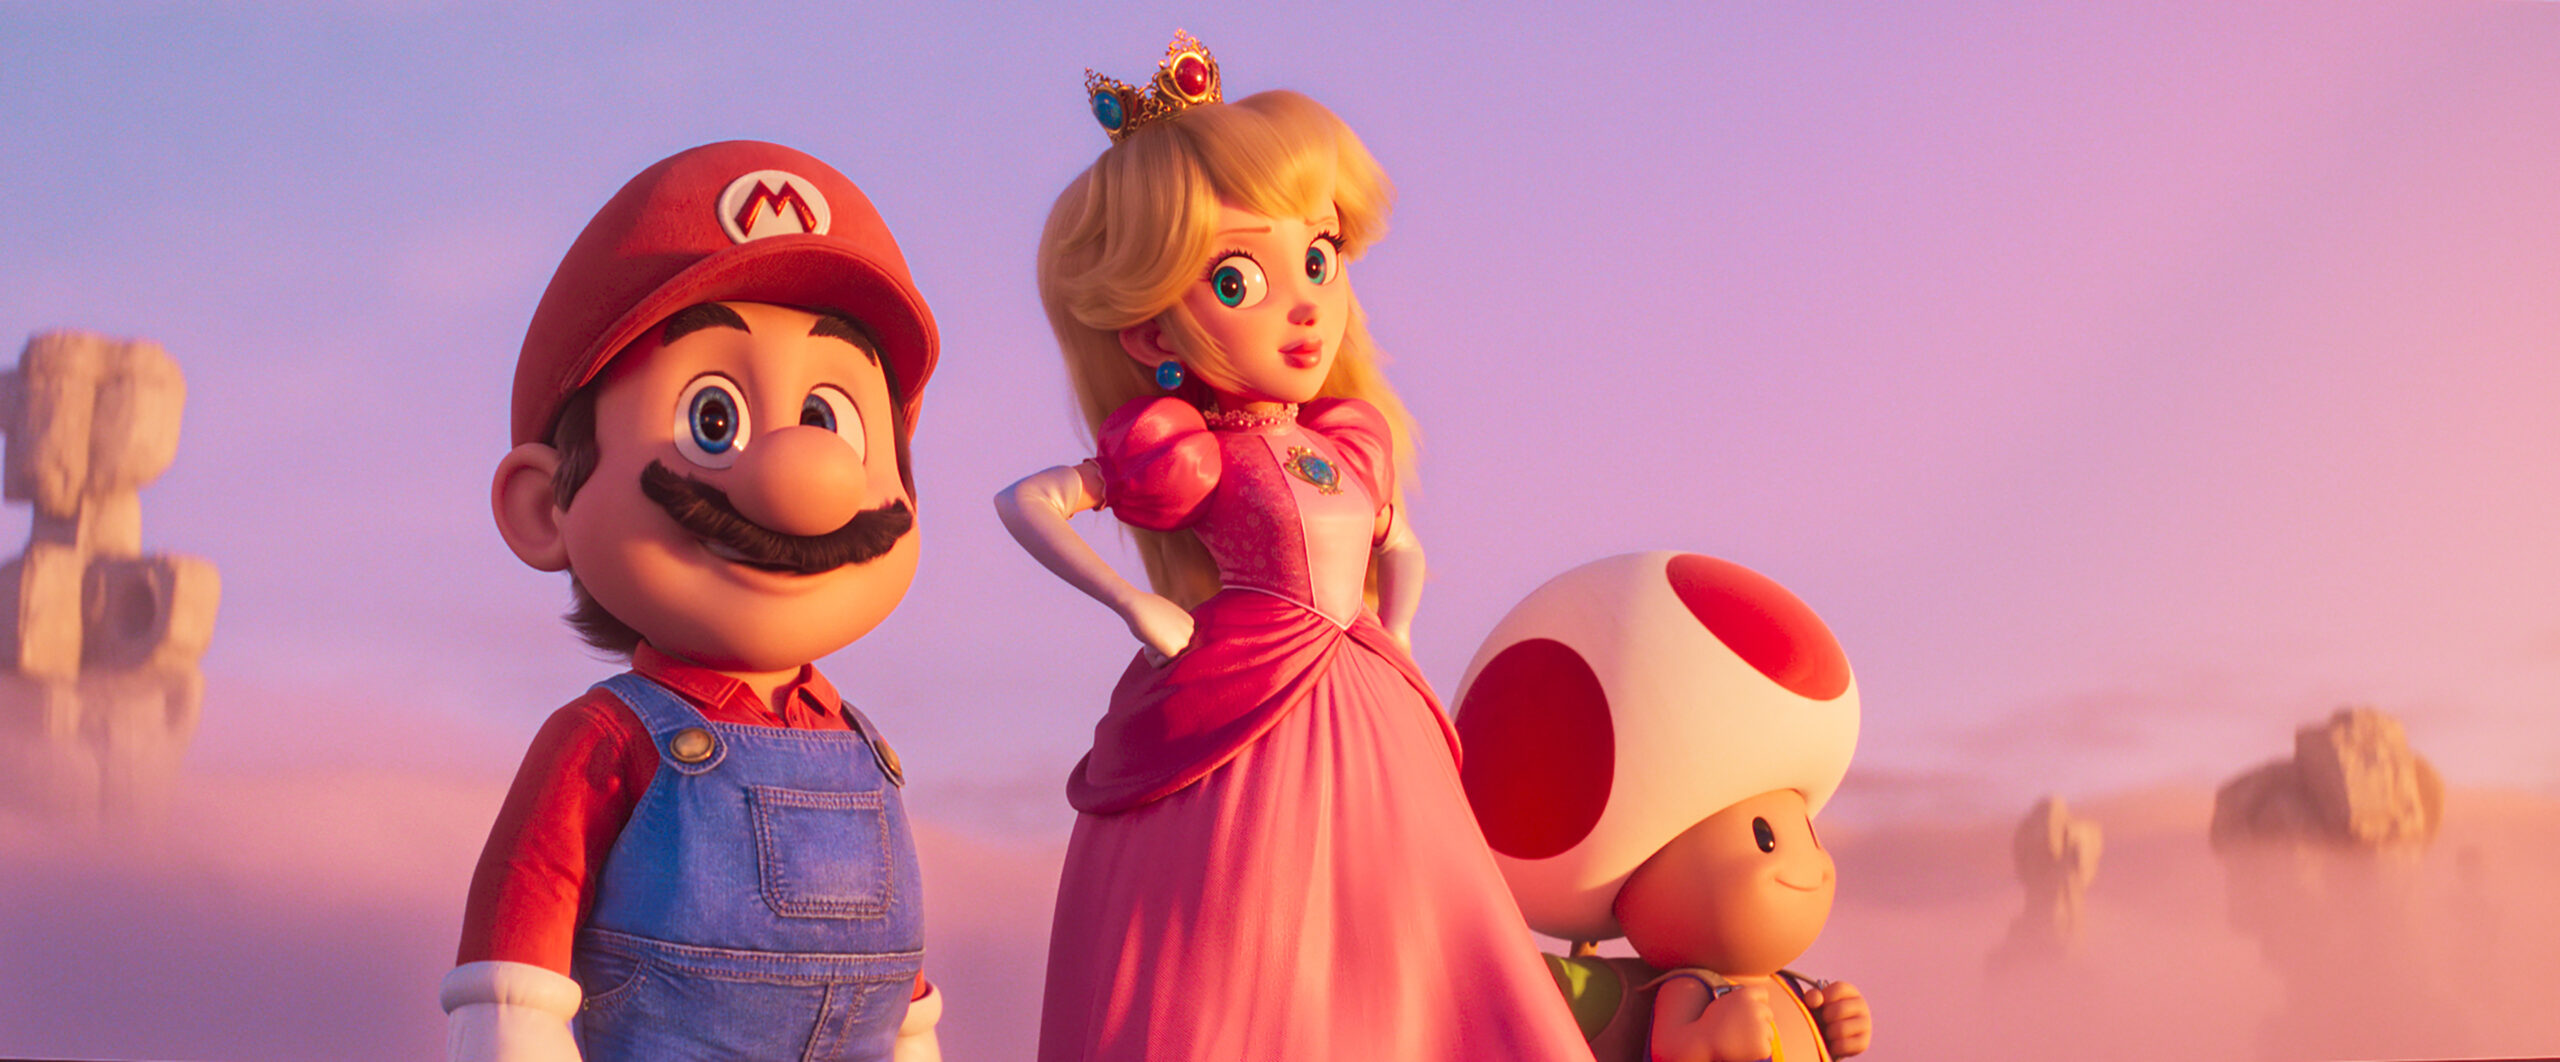 (da esquerda) Mario (Chris Pratt), Princesa Peach (Anya Taylor-Joy) e Toad (Keegan-Michael Key) no filme The Super Mario Bros. da Nintendo e da Illumination, dirigido por Aaron Horvath e Michael Jelenic.